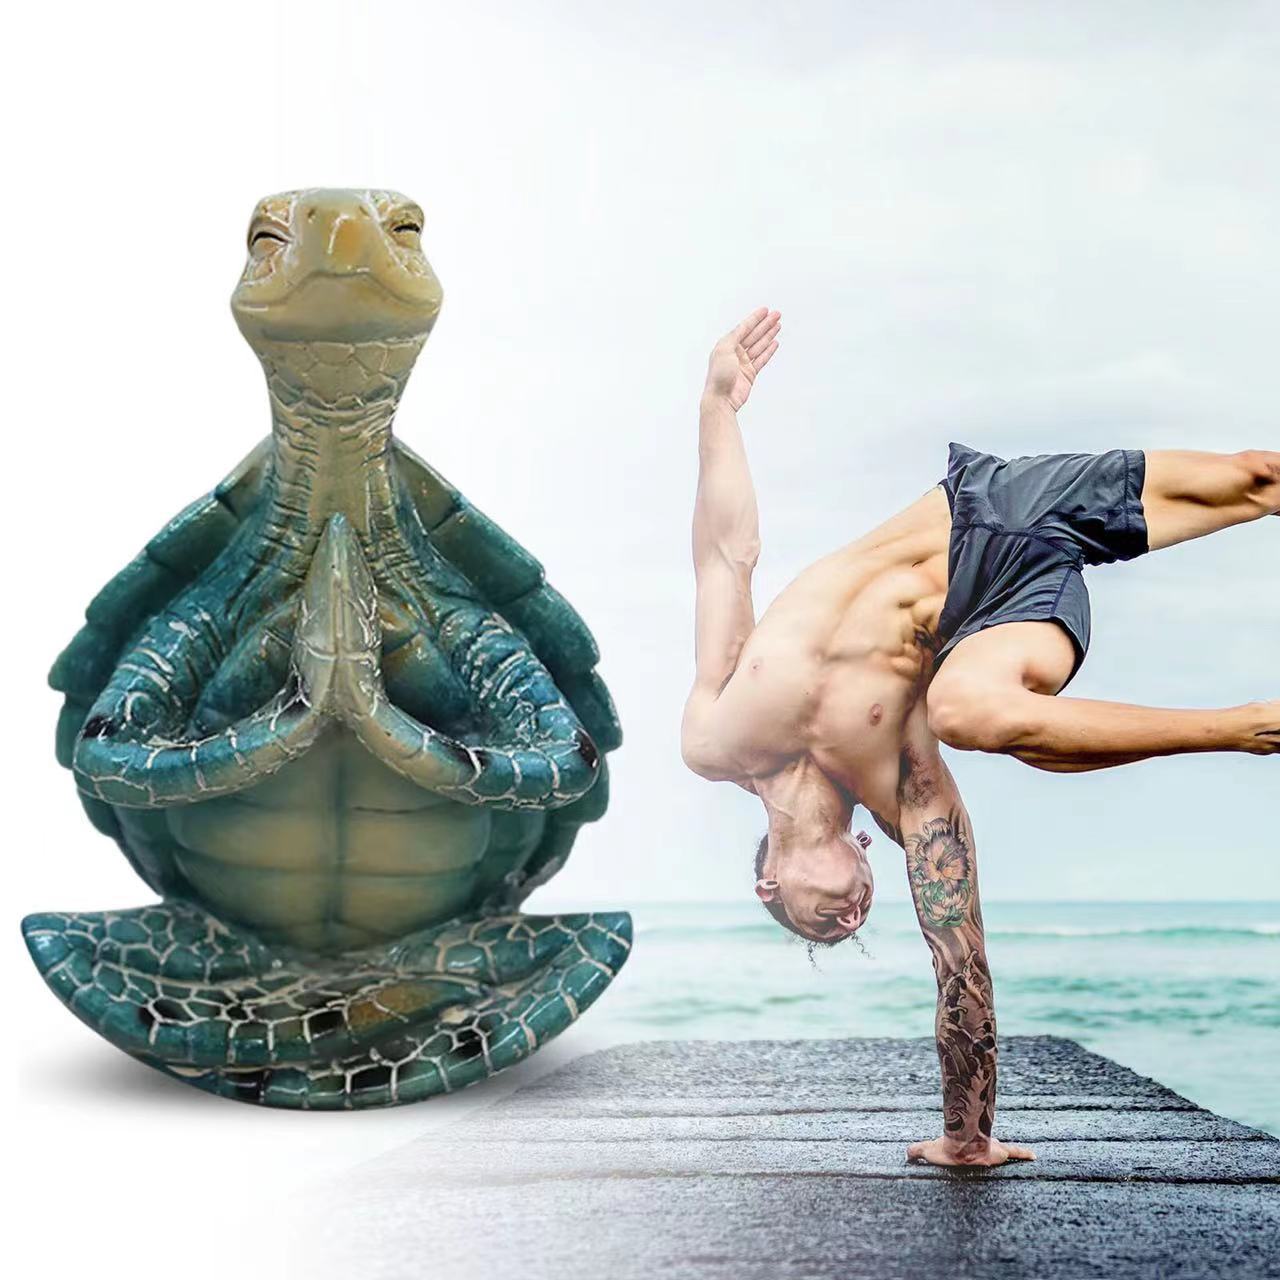 Sea Turtle Yoga Statue Sea Turtle Meditation Home Decor